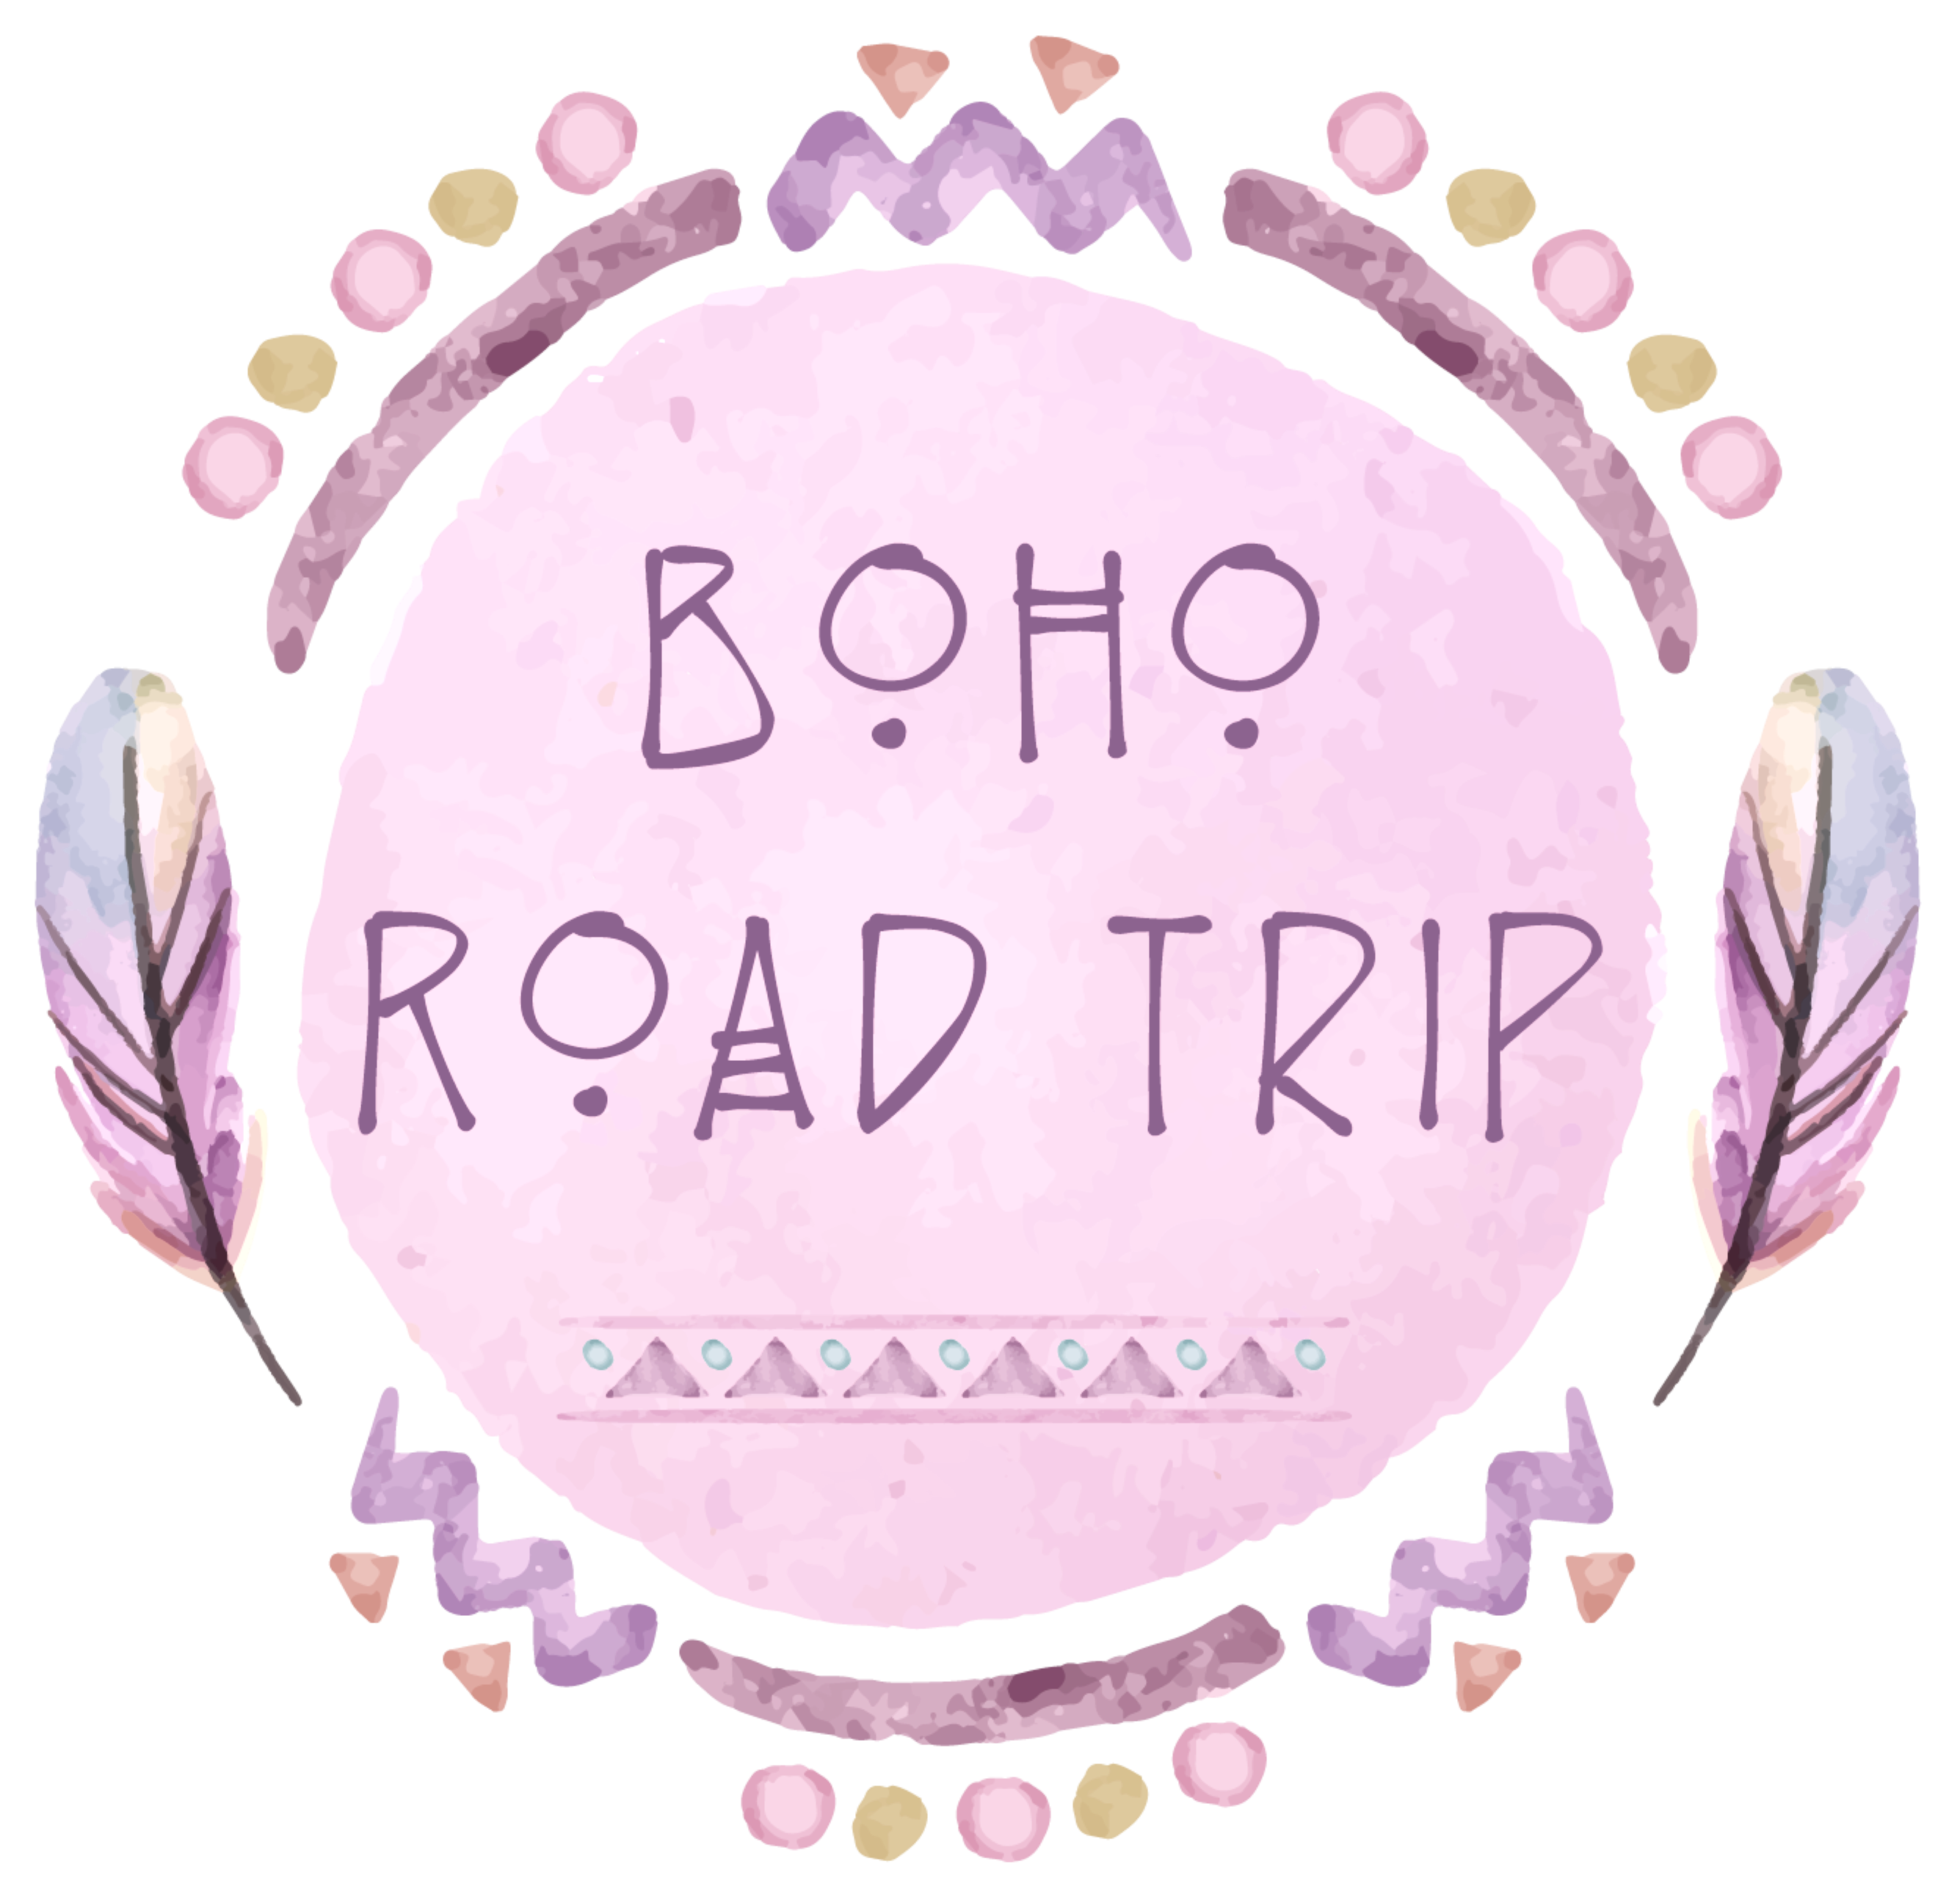 Boho Road Trip logo